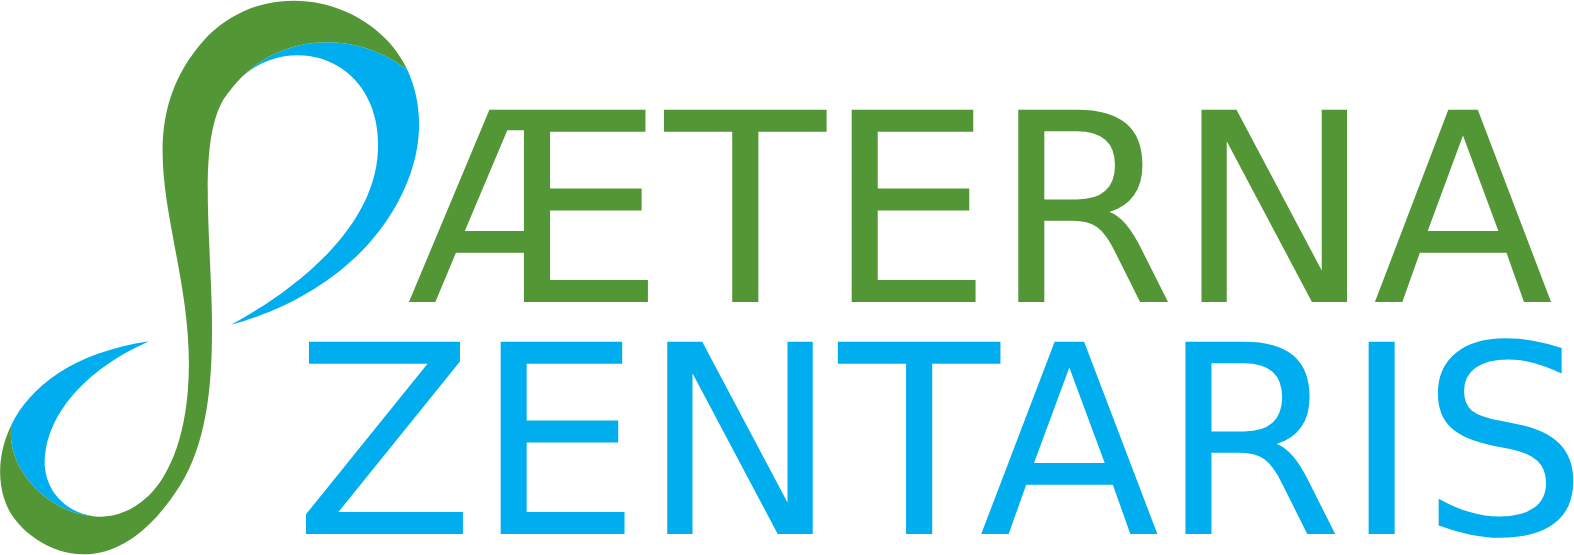 Aeterna Zentaris logo large (transparent PNG)